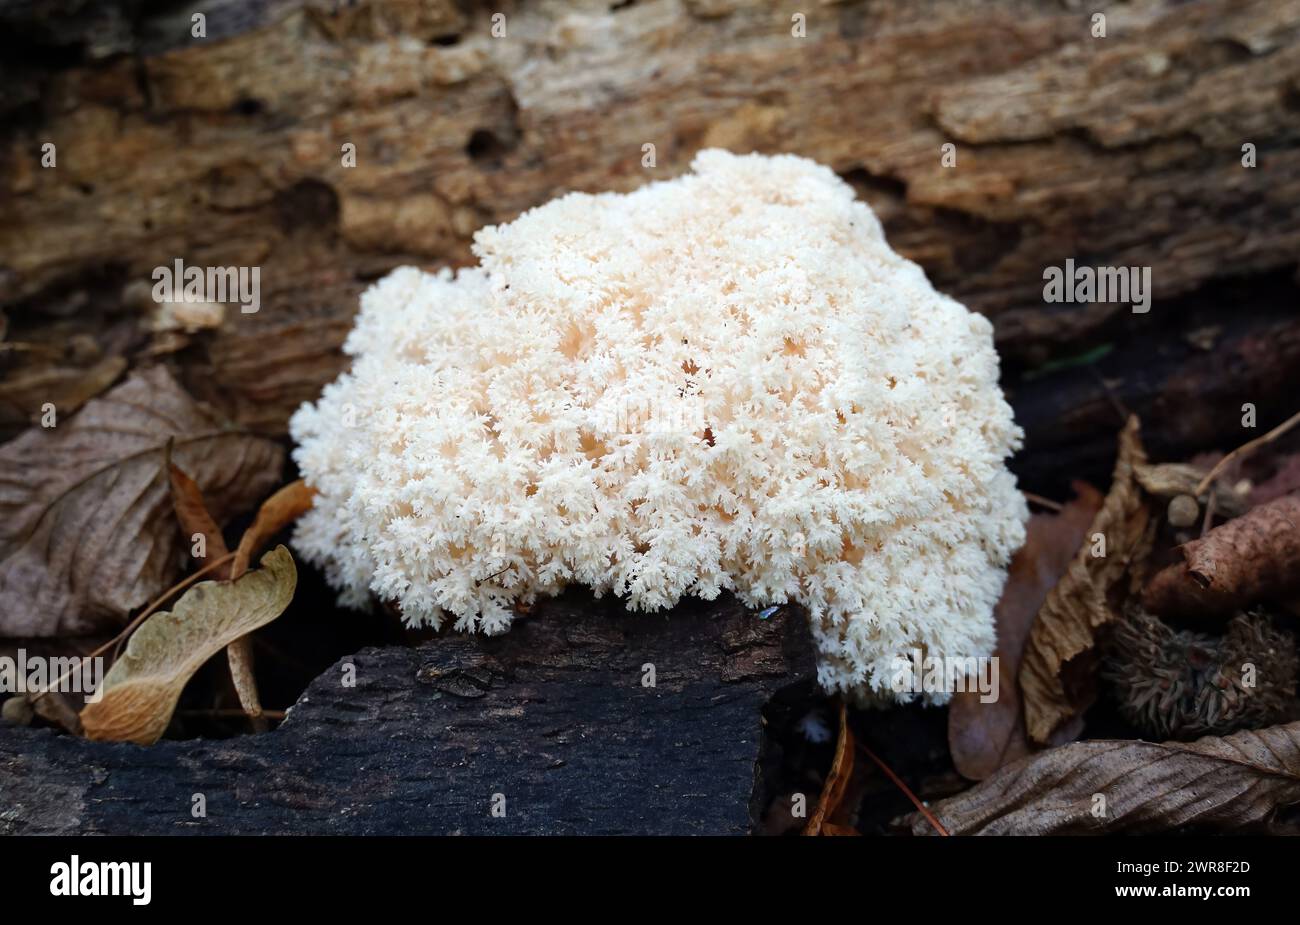 coral tooth fungus, comb coral mushroom, Ästiger Stachelbart, Hericium coralloides, közönséges petrezselyemgomba, Hungary, Magyarország, Europe Stock Photo